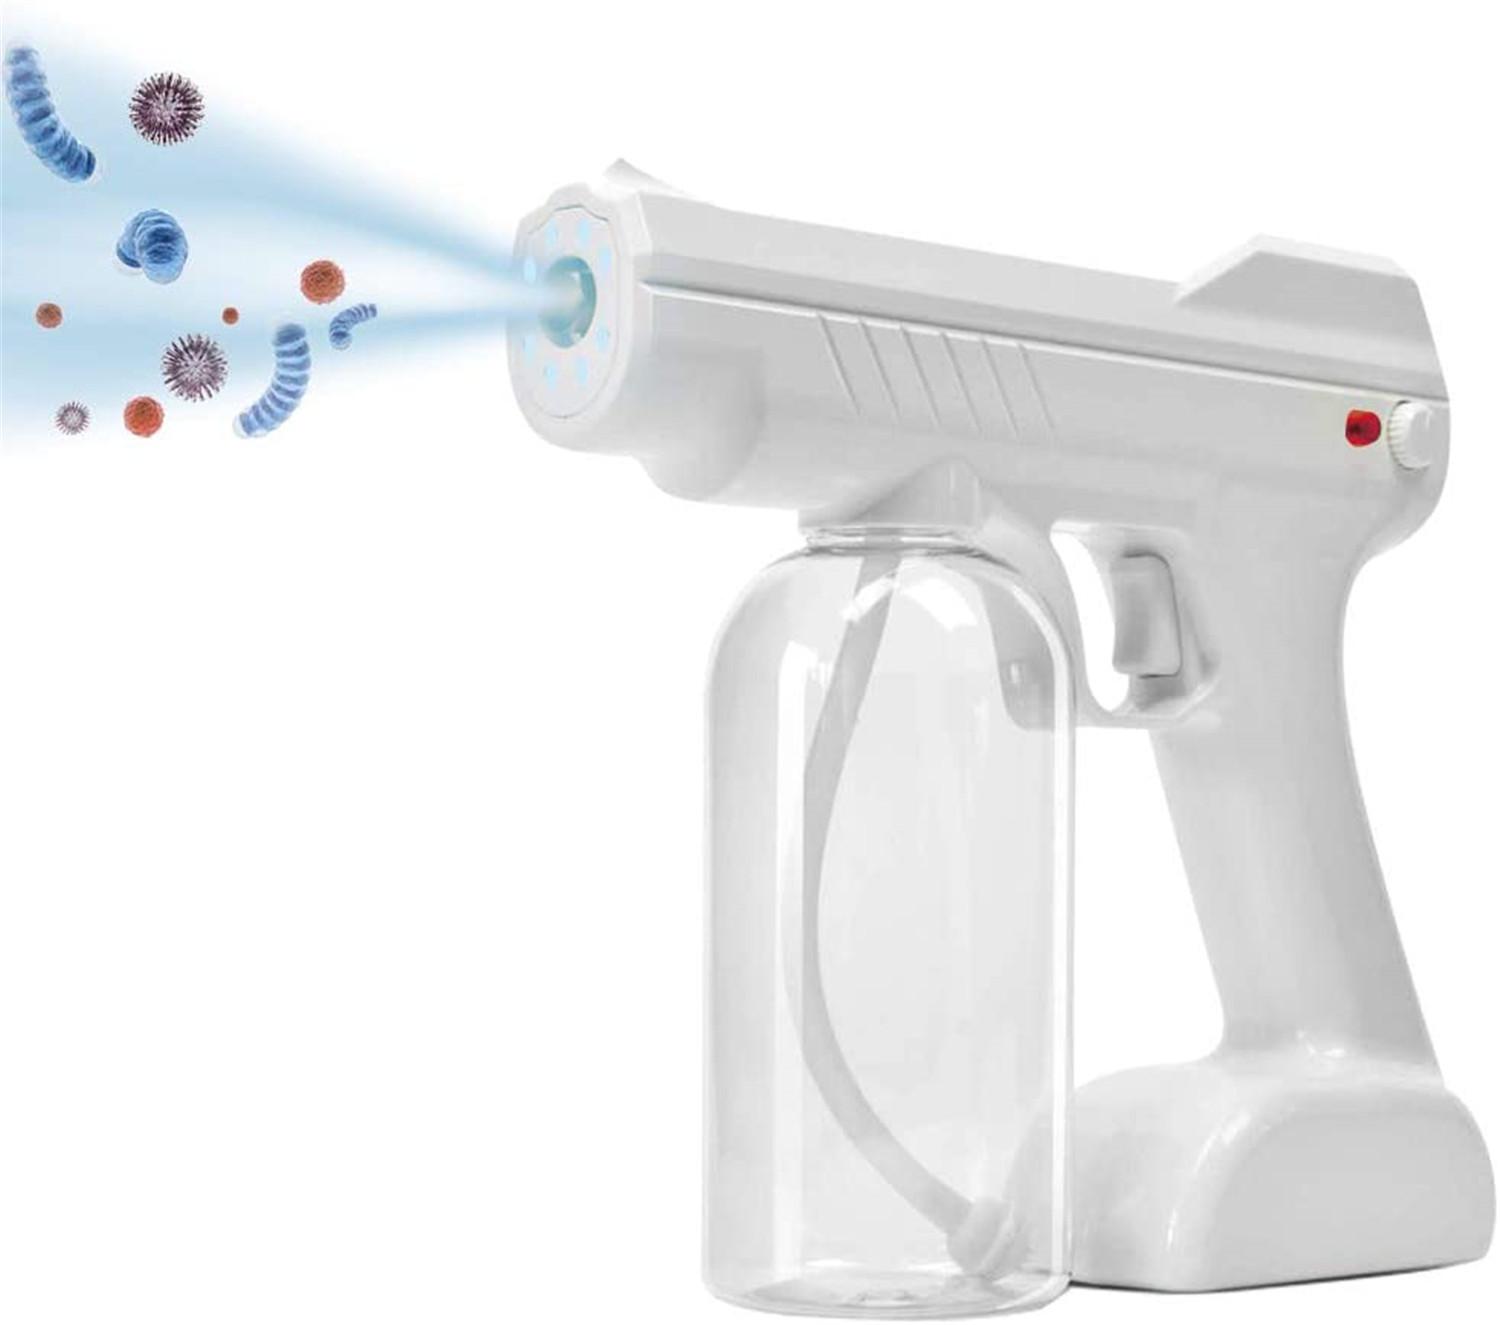 A nano spray gun in action taking care of pathogens.